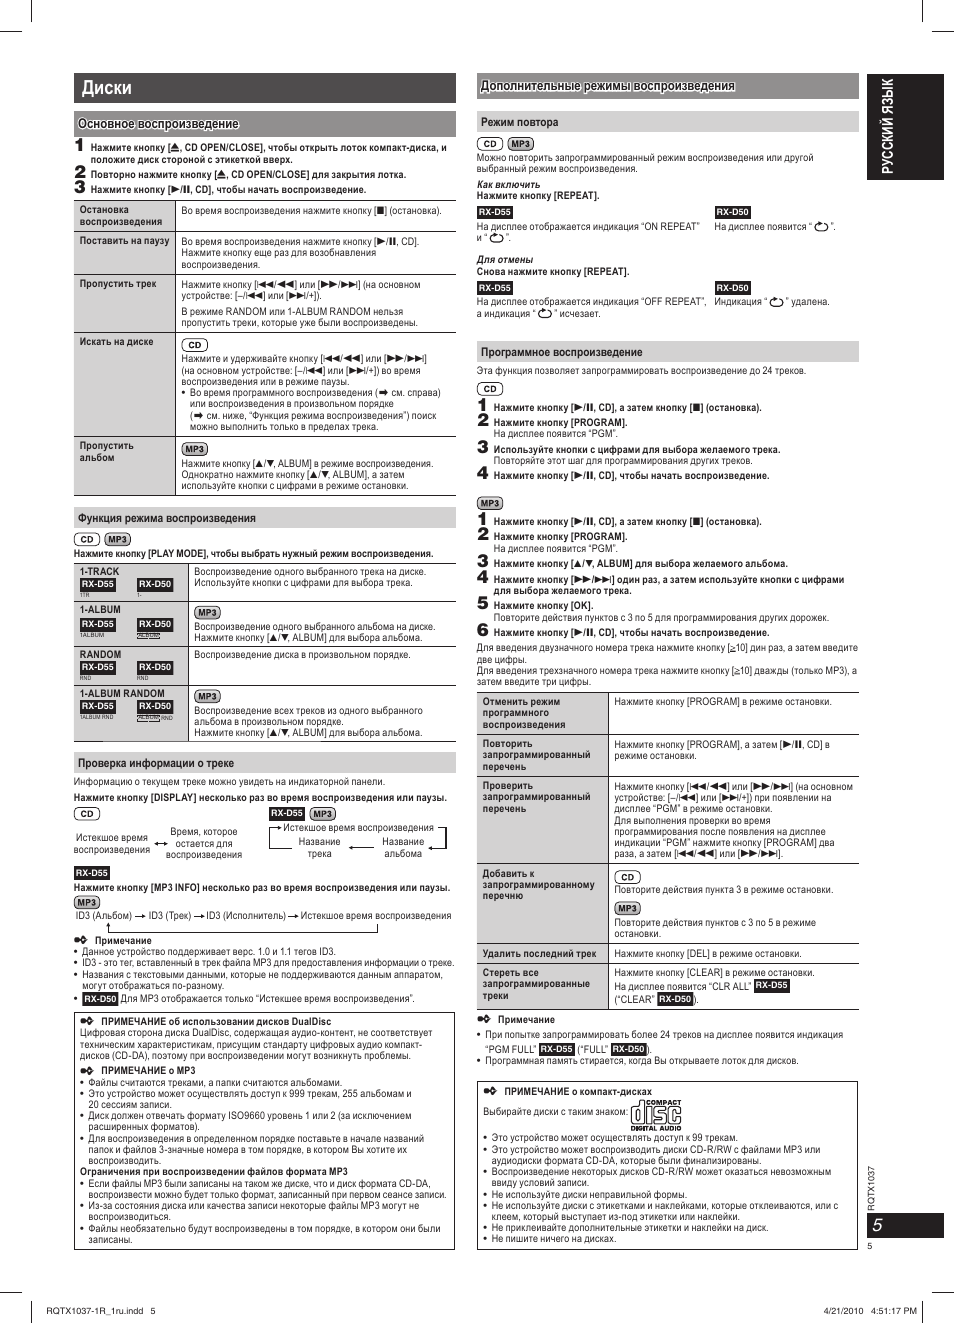 Диски | Инструкция по эксплуатации Panasonic RX-D55 | Страница 5 / 16